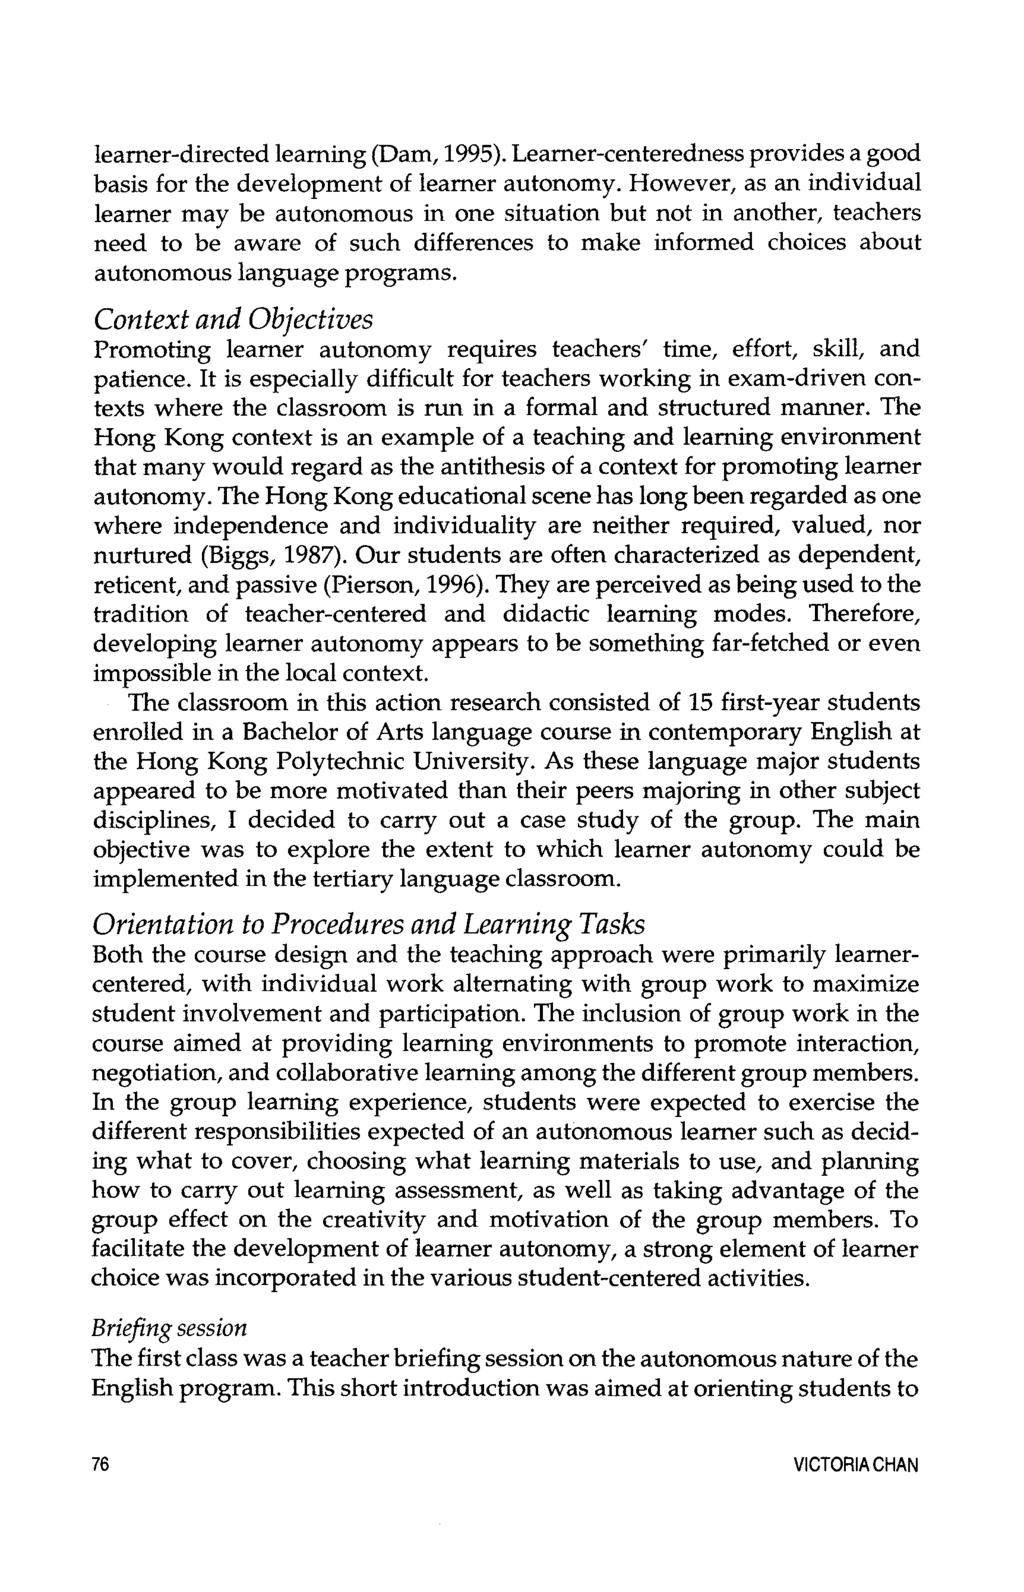 leamer-directed learning (Dam, 1995). Learner-centeredness provides a good basis for the development of learner autonomy.